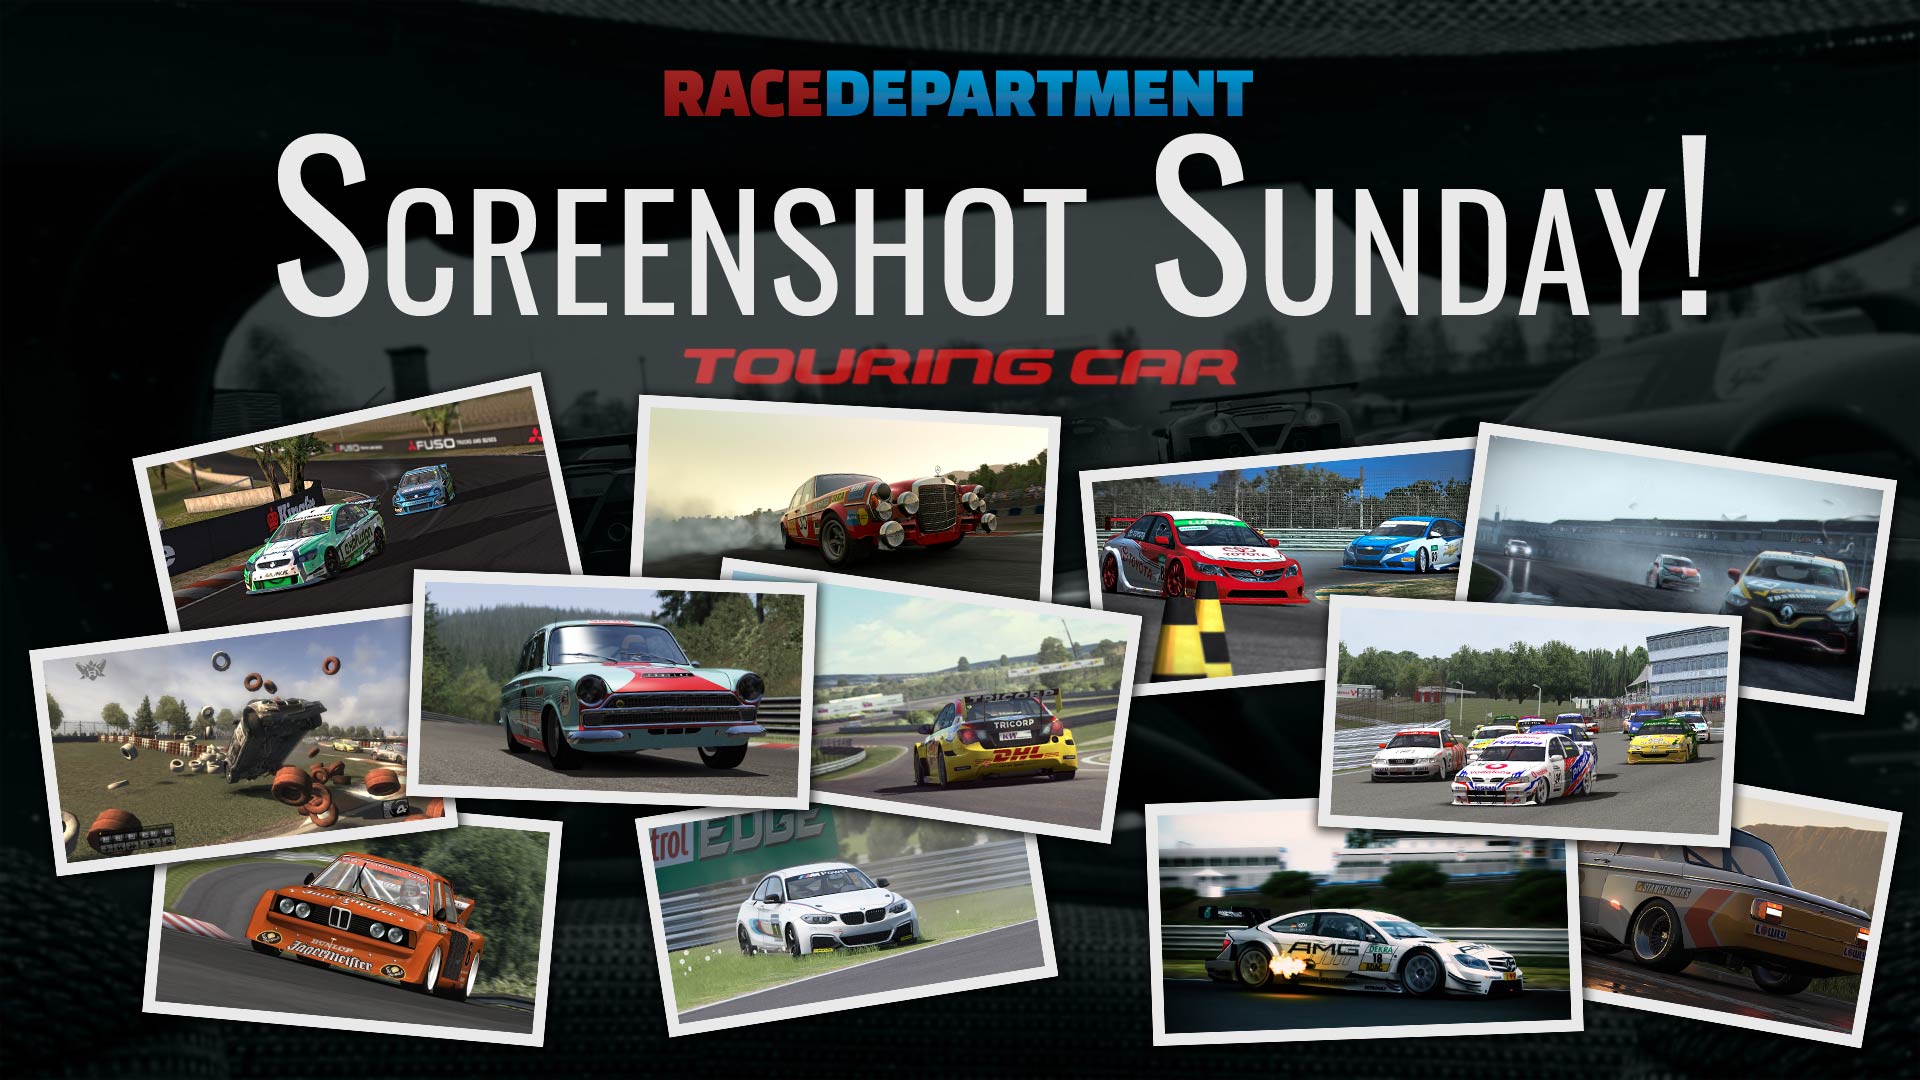 Screenshot Sunday - Touring Cars.jpg